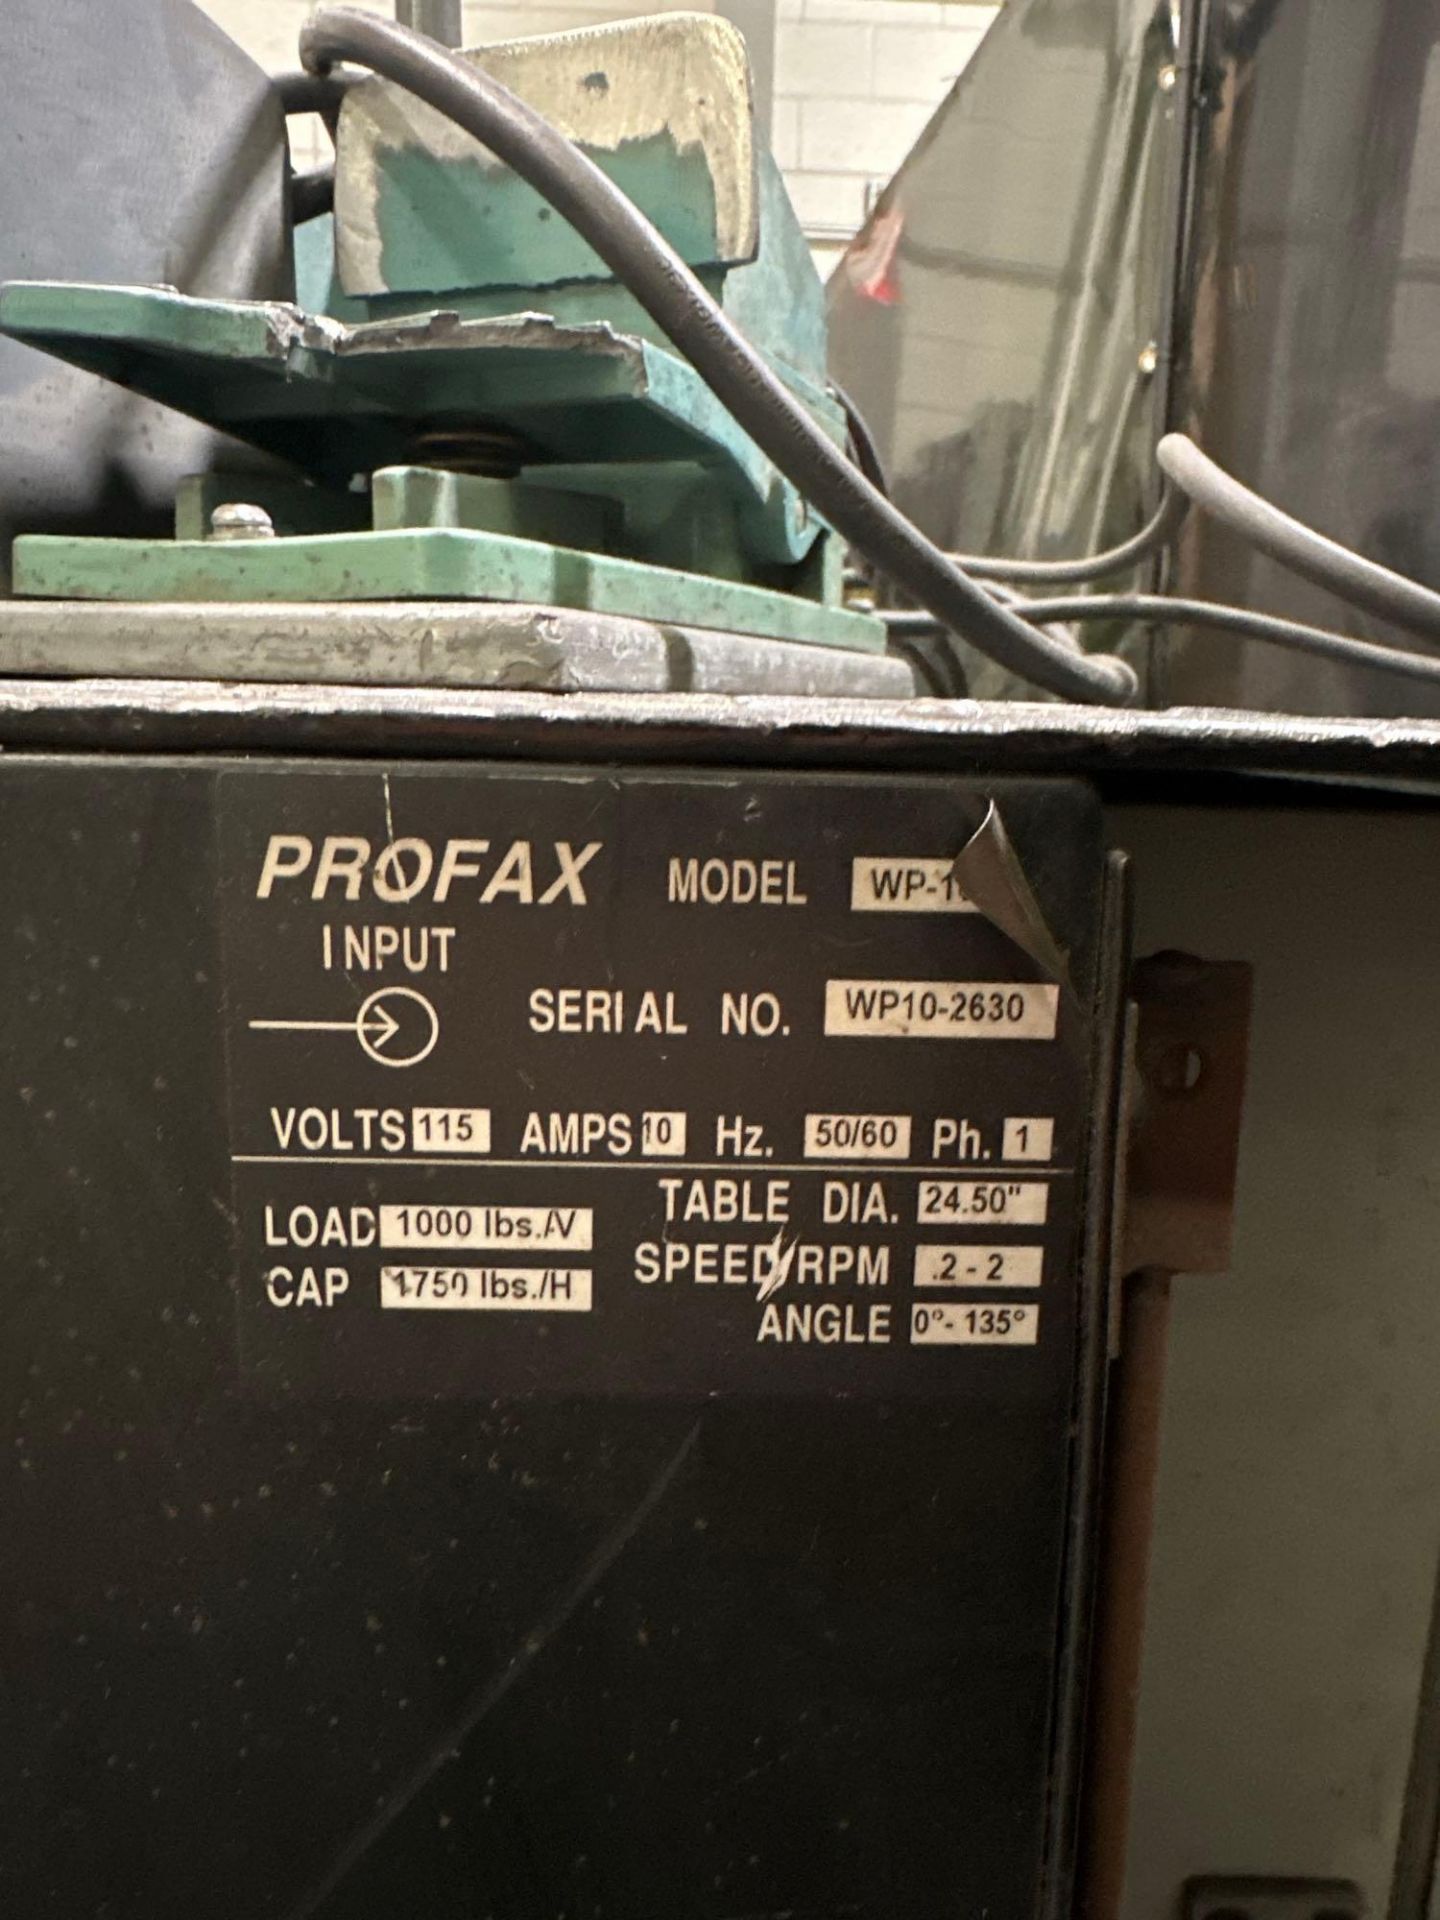 Profax WP-1000 Welding Postioner. 25.5” Table, 2 rpm, 1750lbs Cap, 0-135 Angle, s/n wp10 - 2630 - Bild 7 aus 7